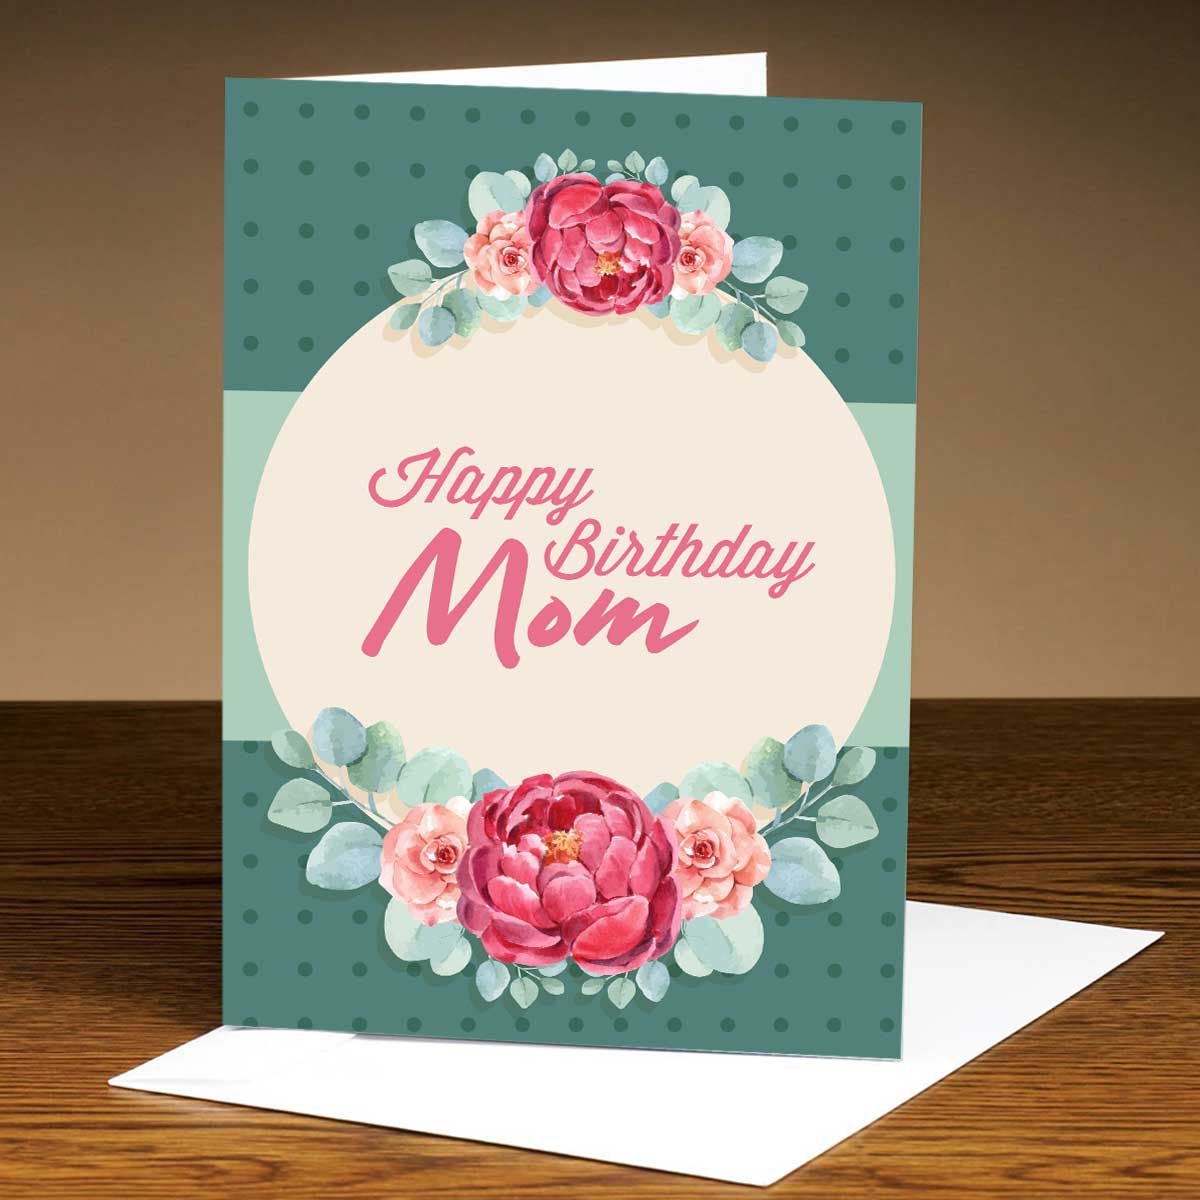 Buy Personalised Happy Birthday Mom Greeting Card Online at Best ...